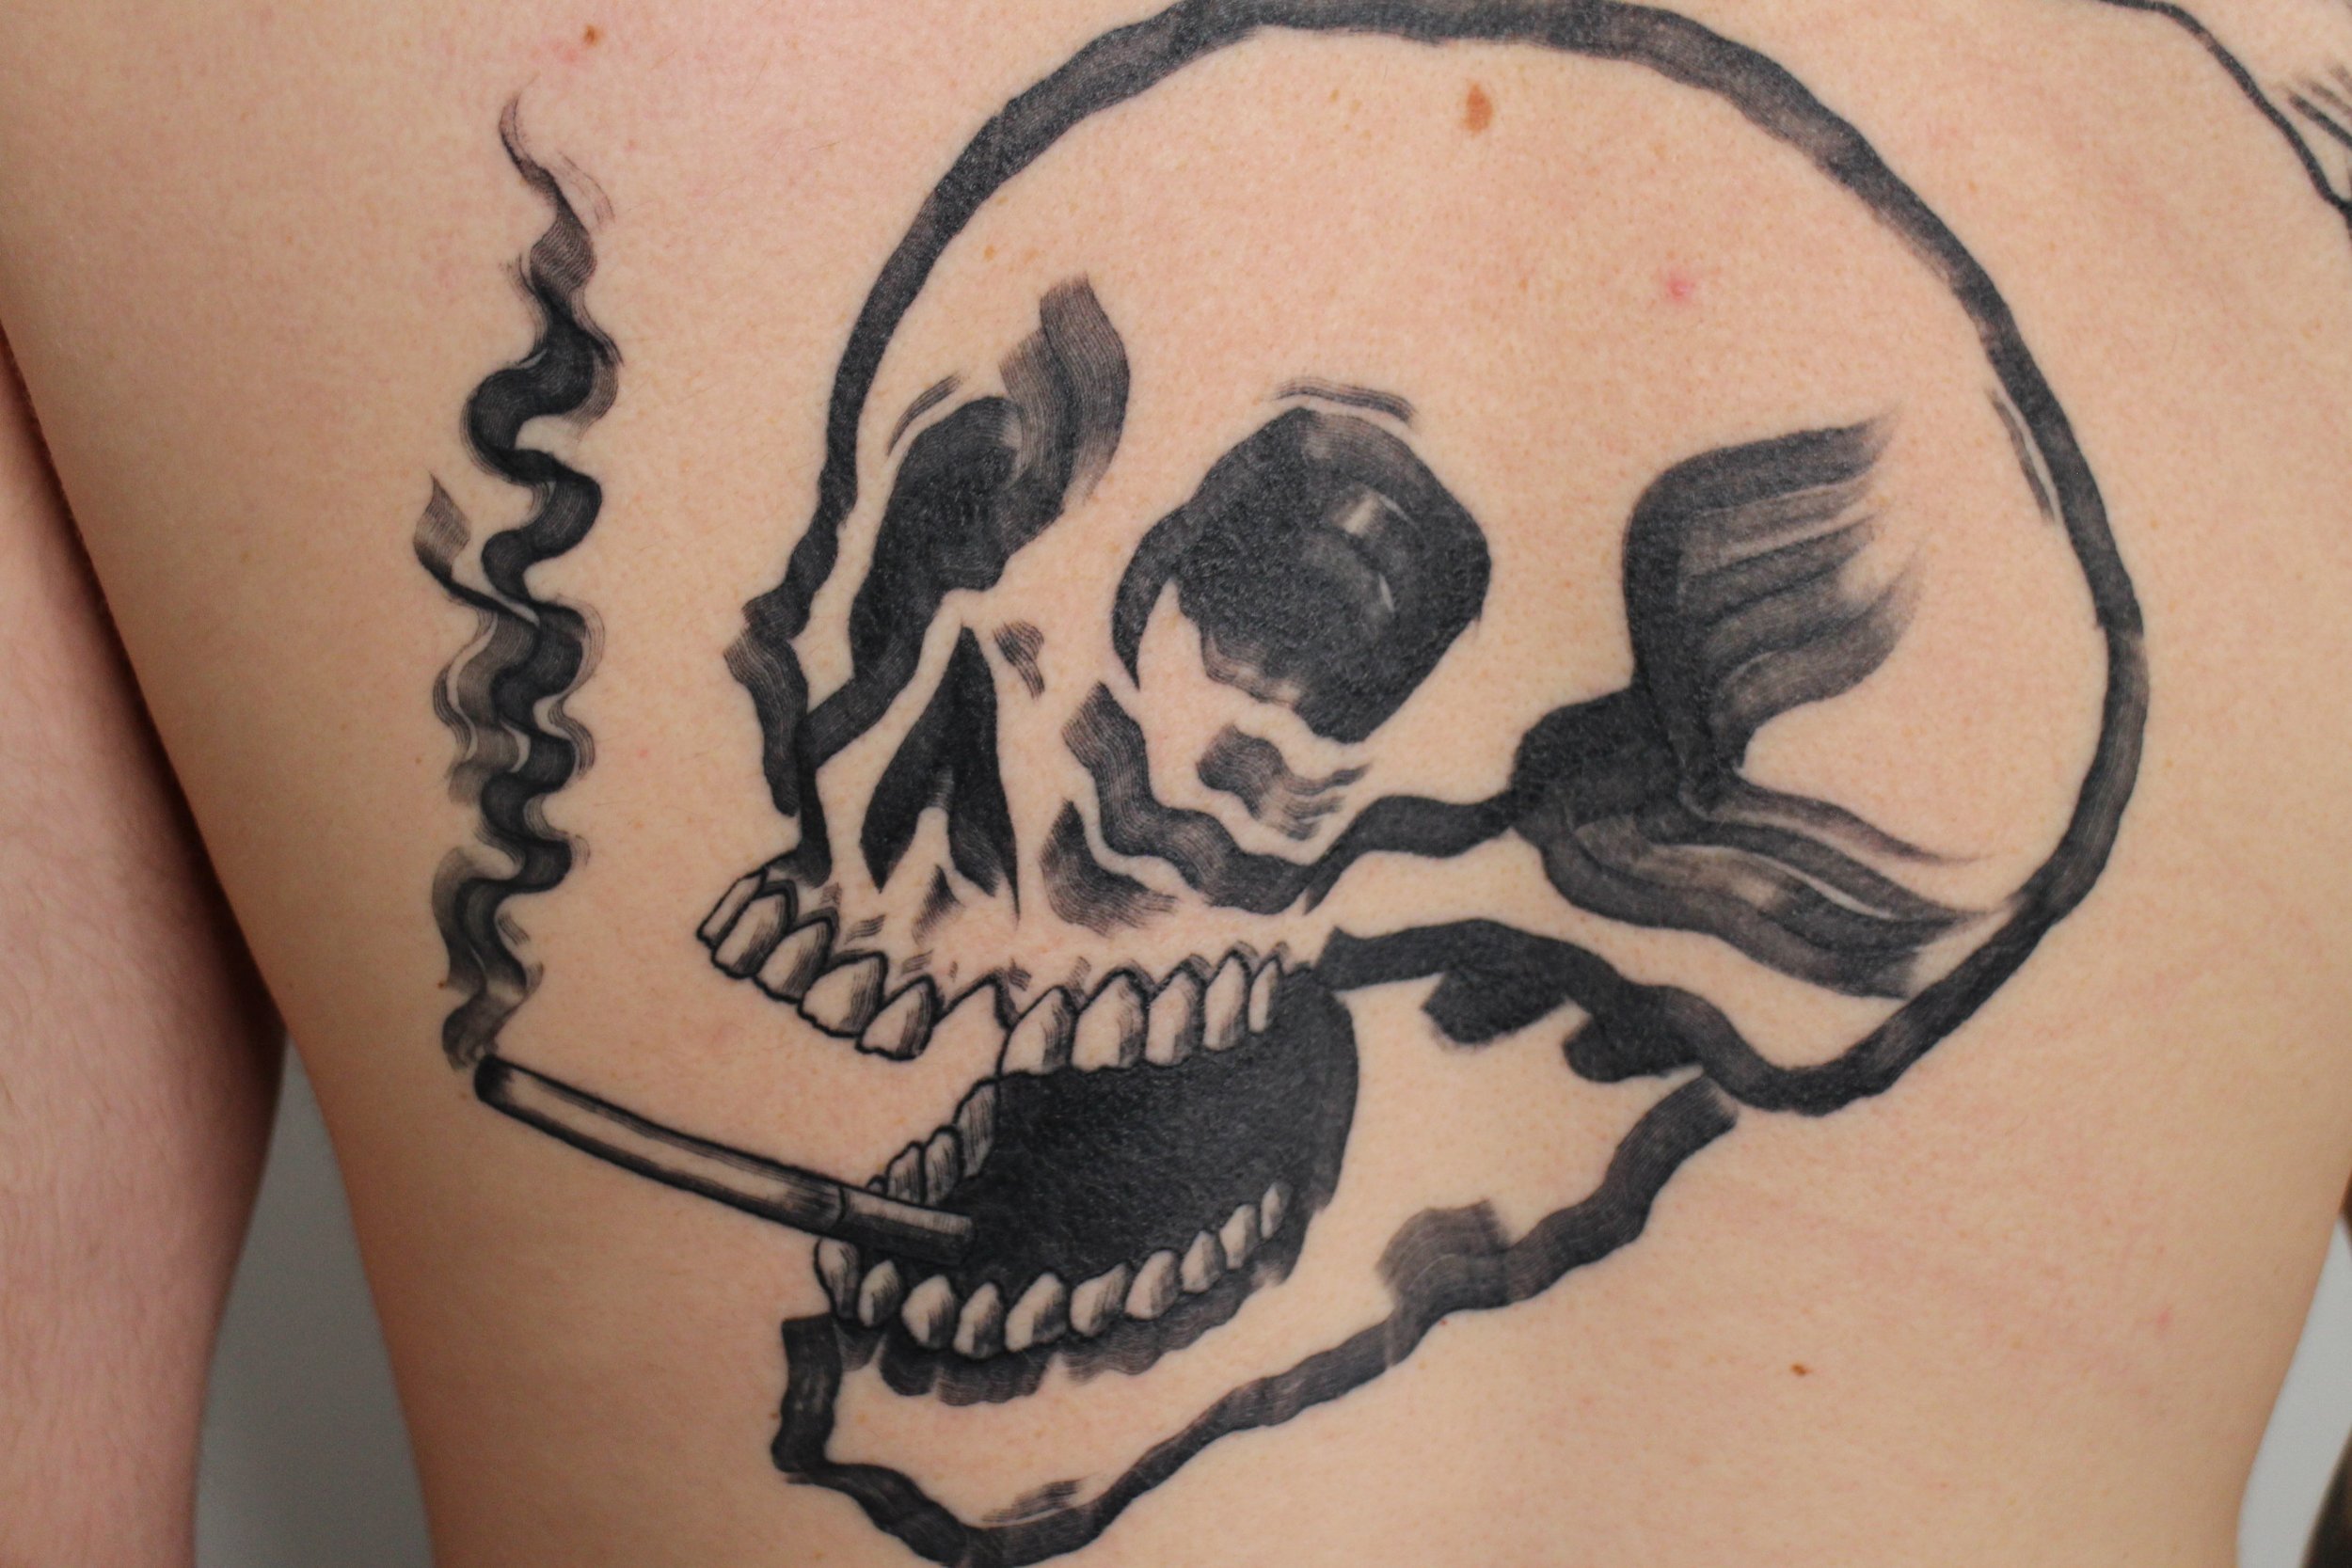 skull mag drag bold tattoo Jacqueline may tattoo art black and grey toronto artist.jpeg